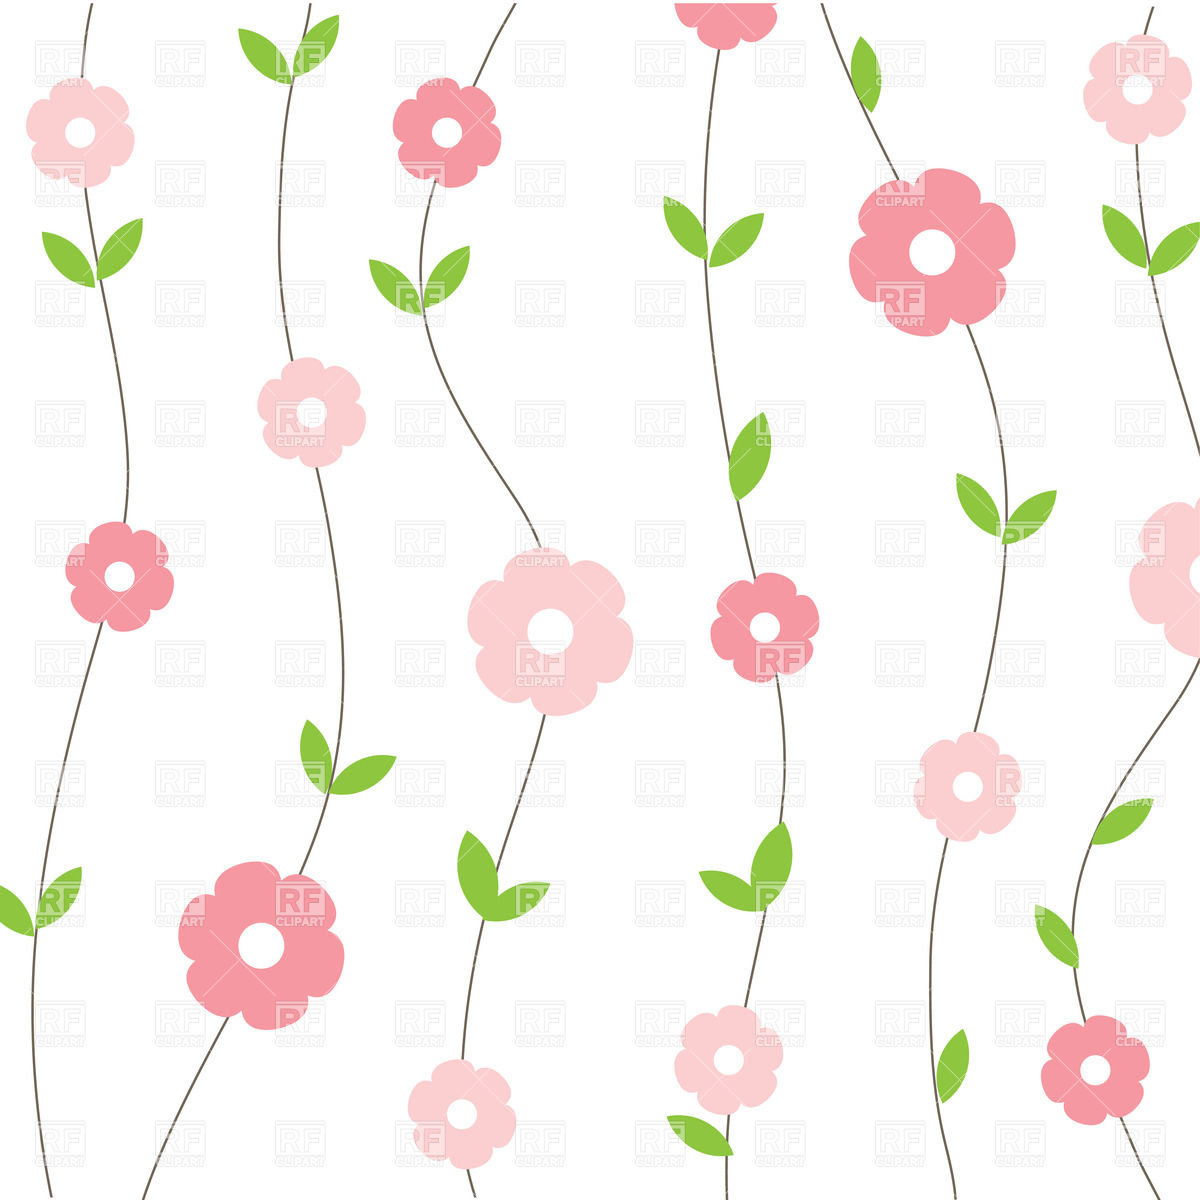 Flower background clipart.